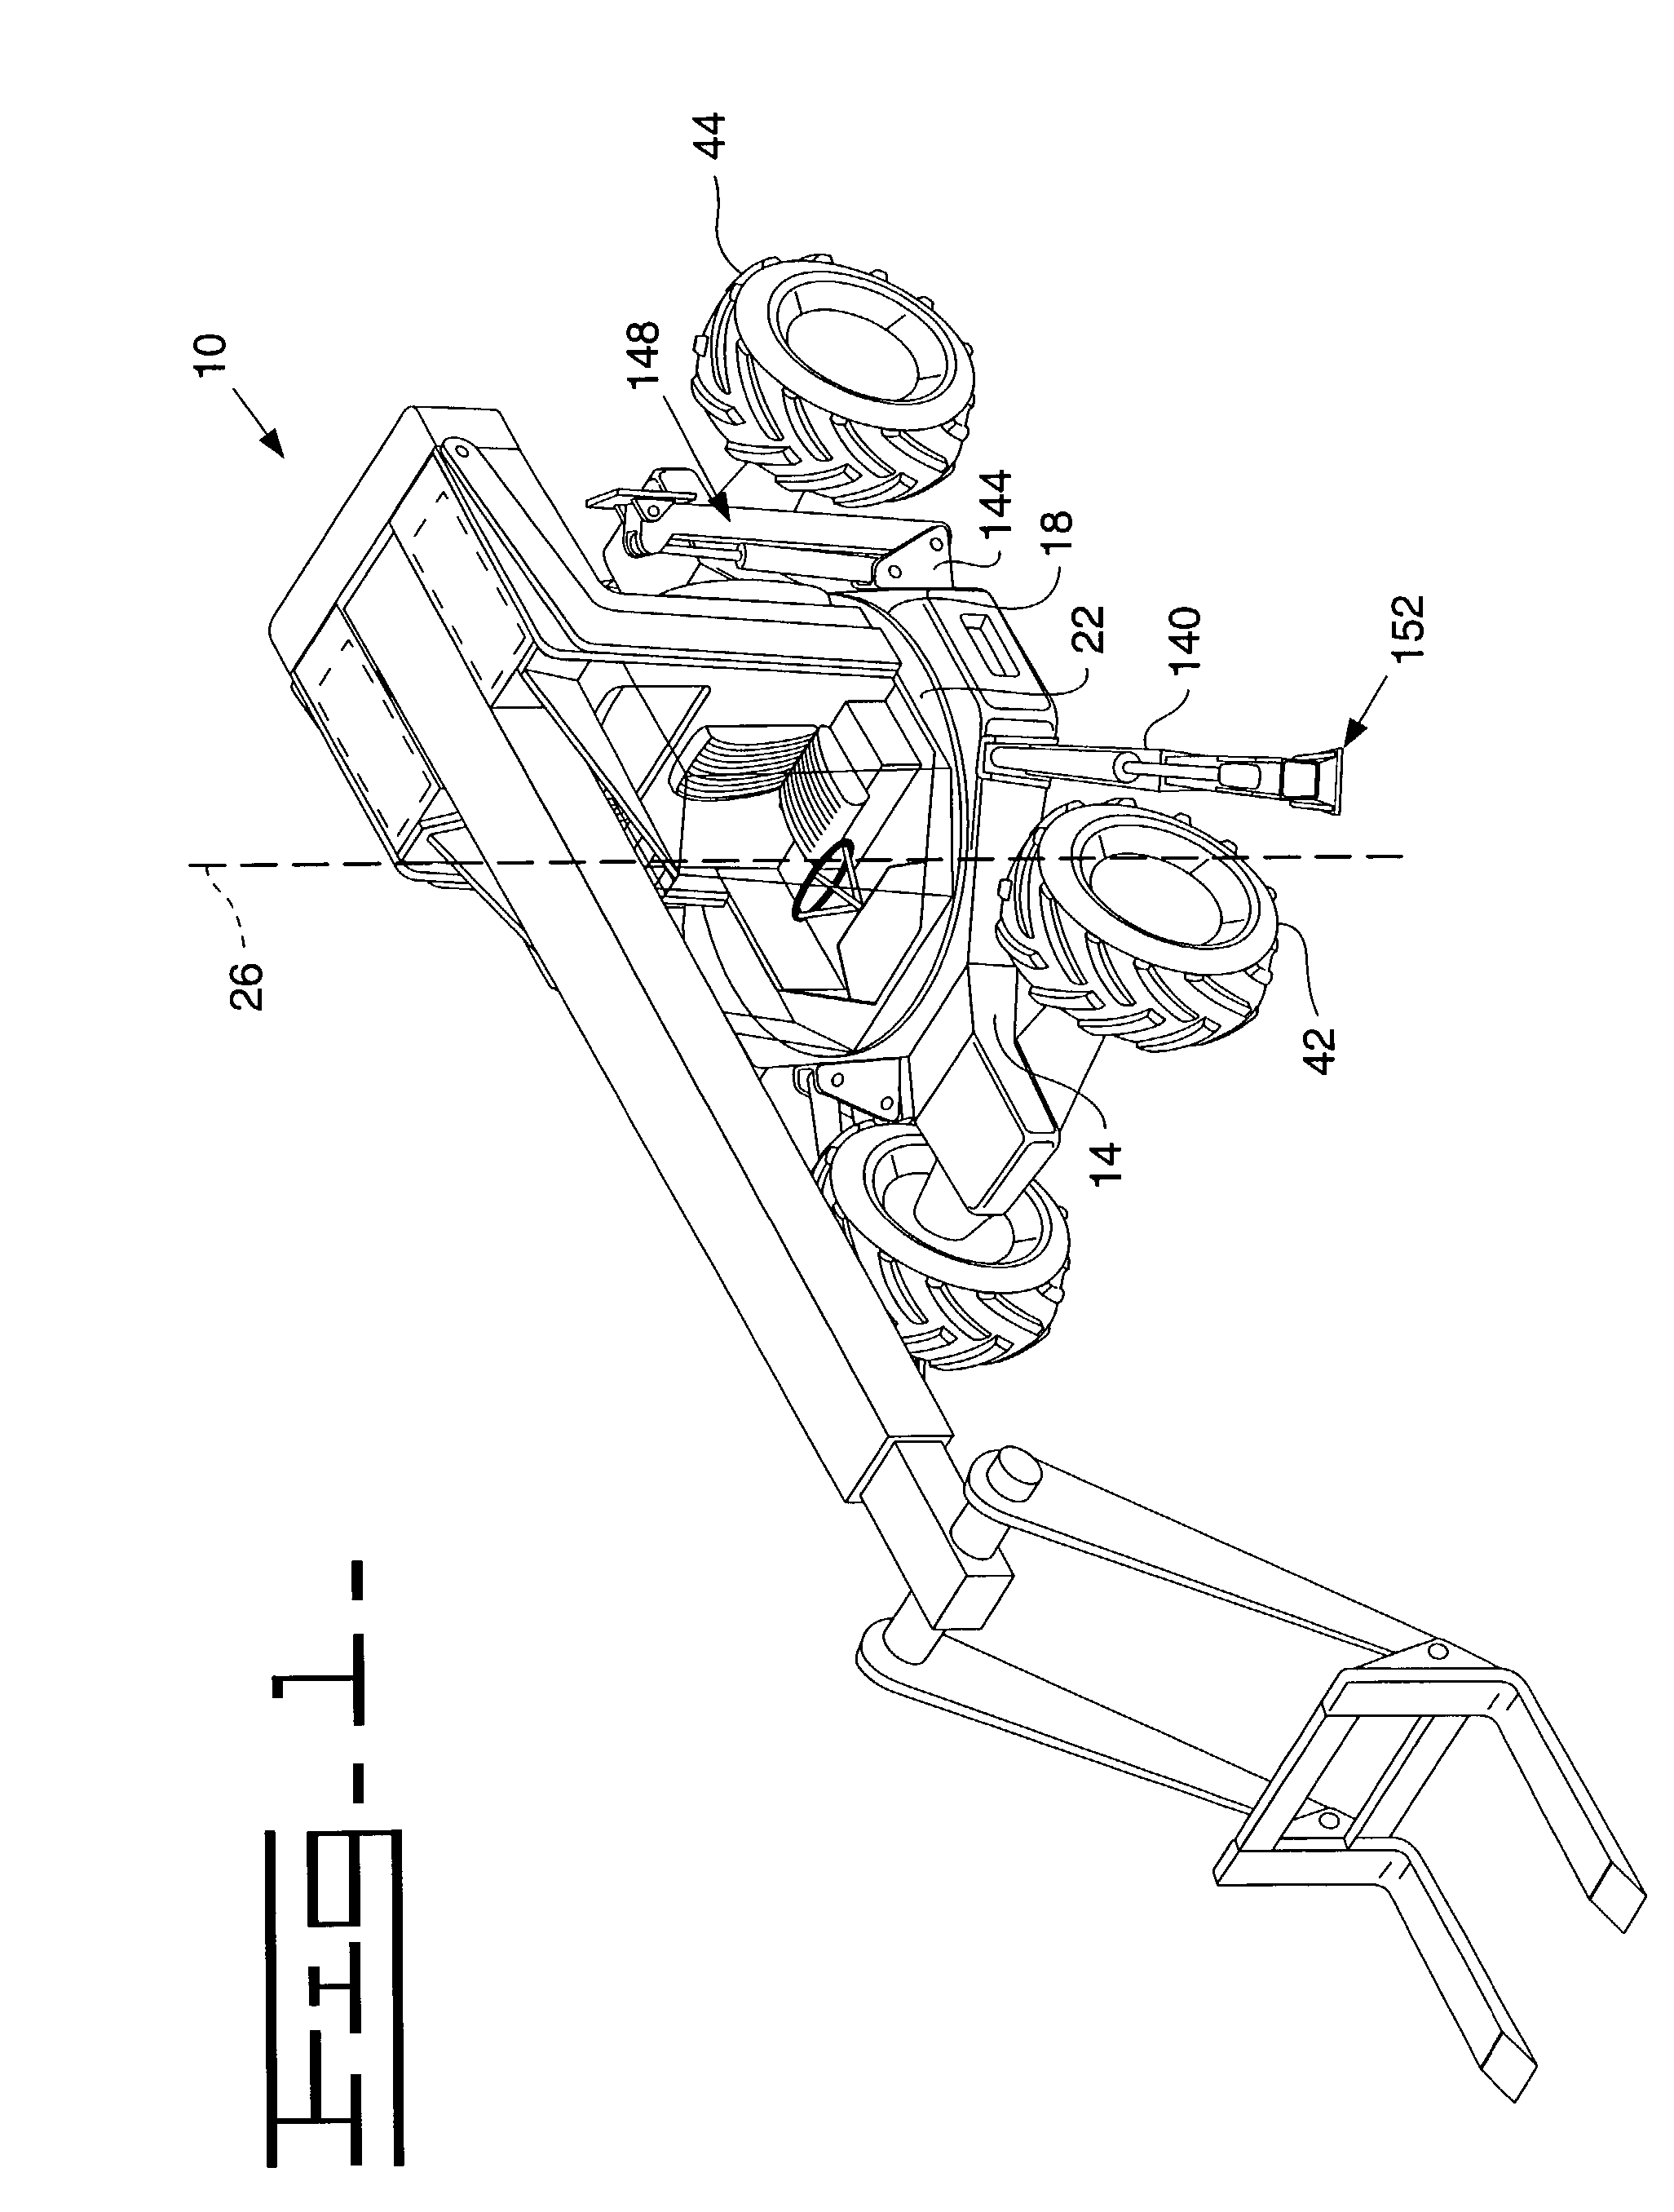 Rotatable and telescopic work machine